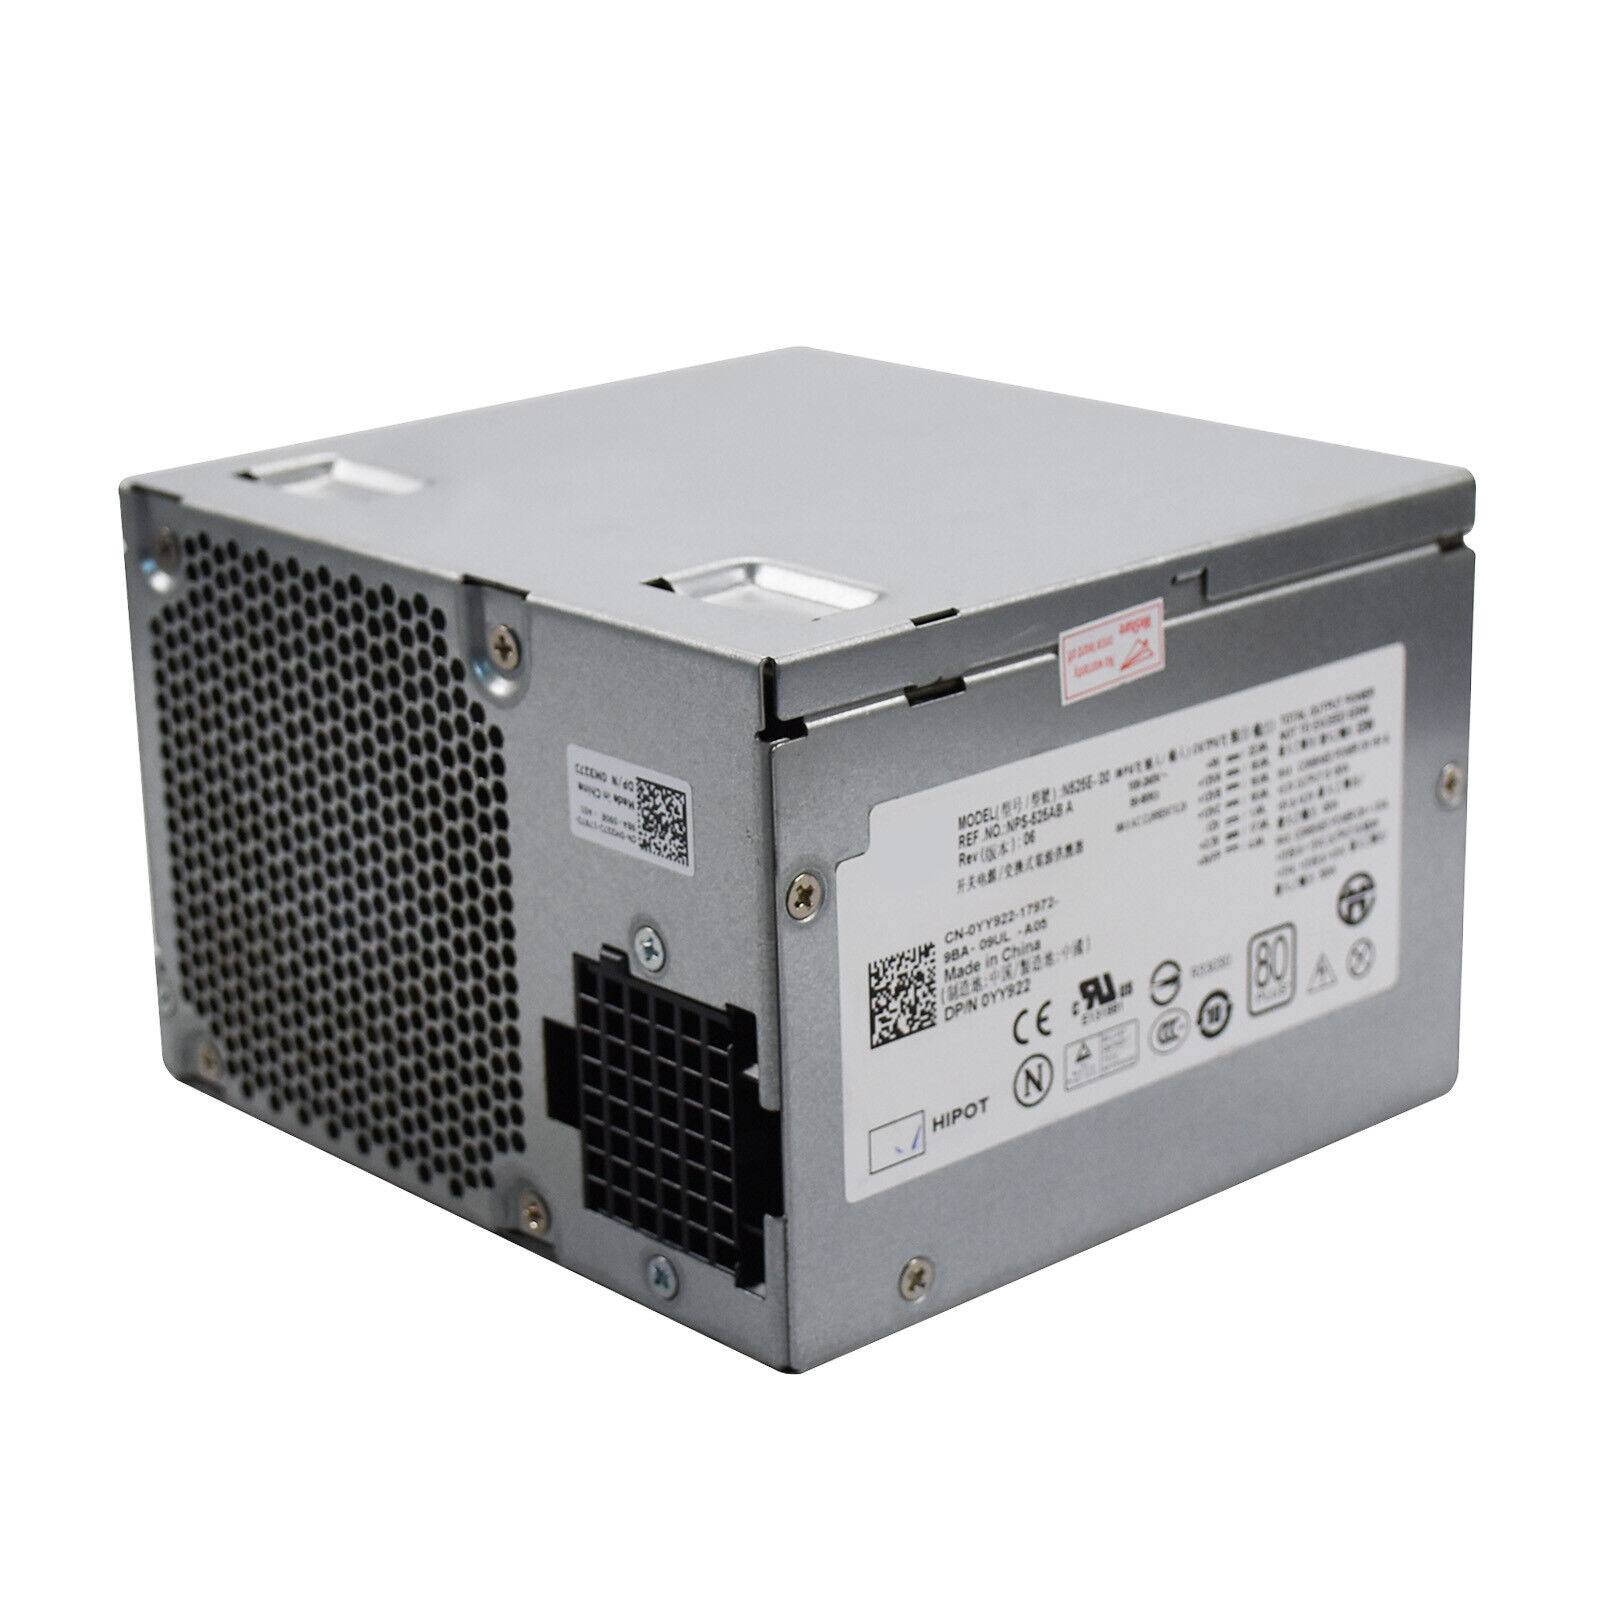 YY922 Power Supply N525E-00 H525E-00 For DeLL Precision 380 390 T3400 T410 525W